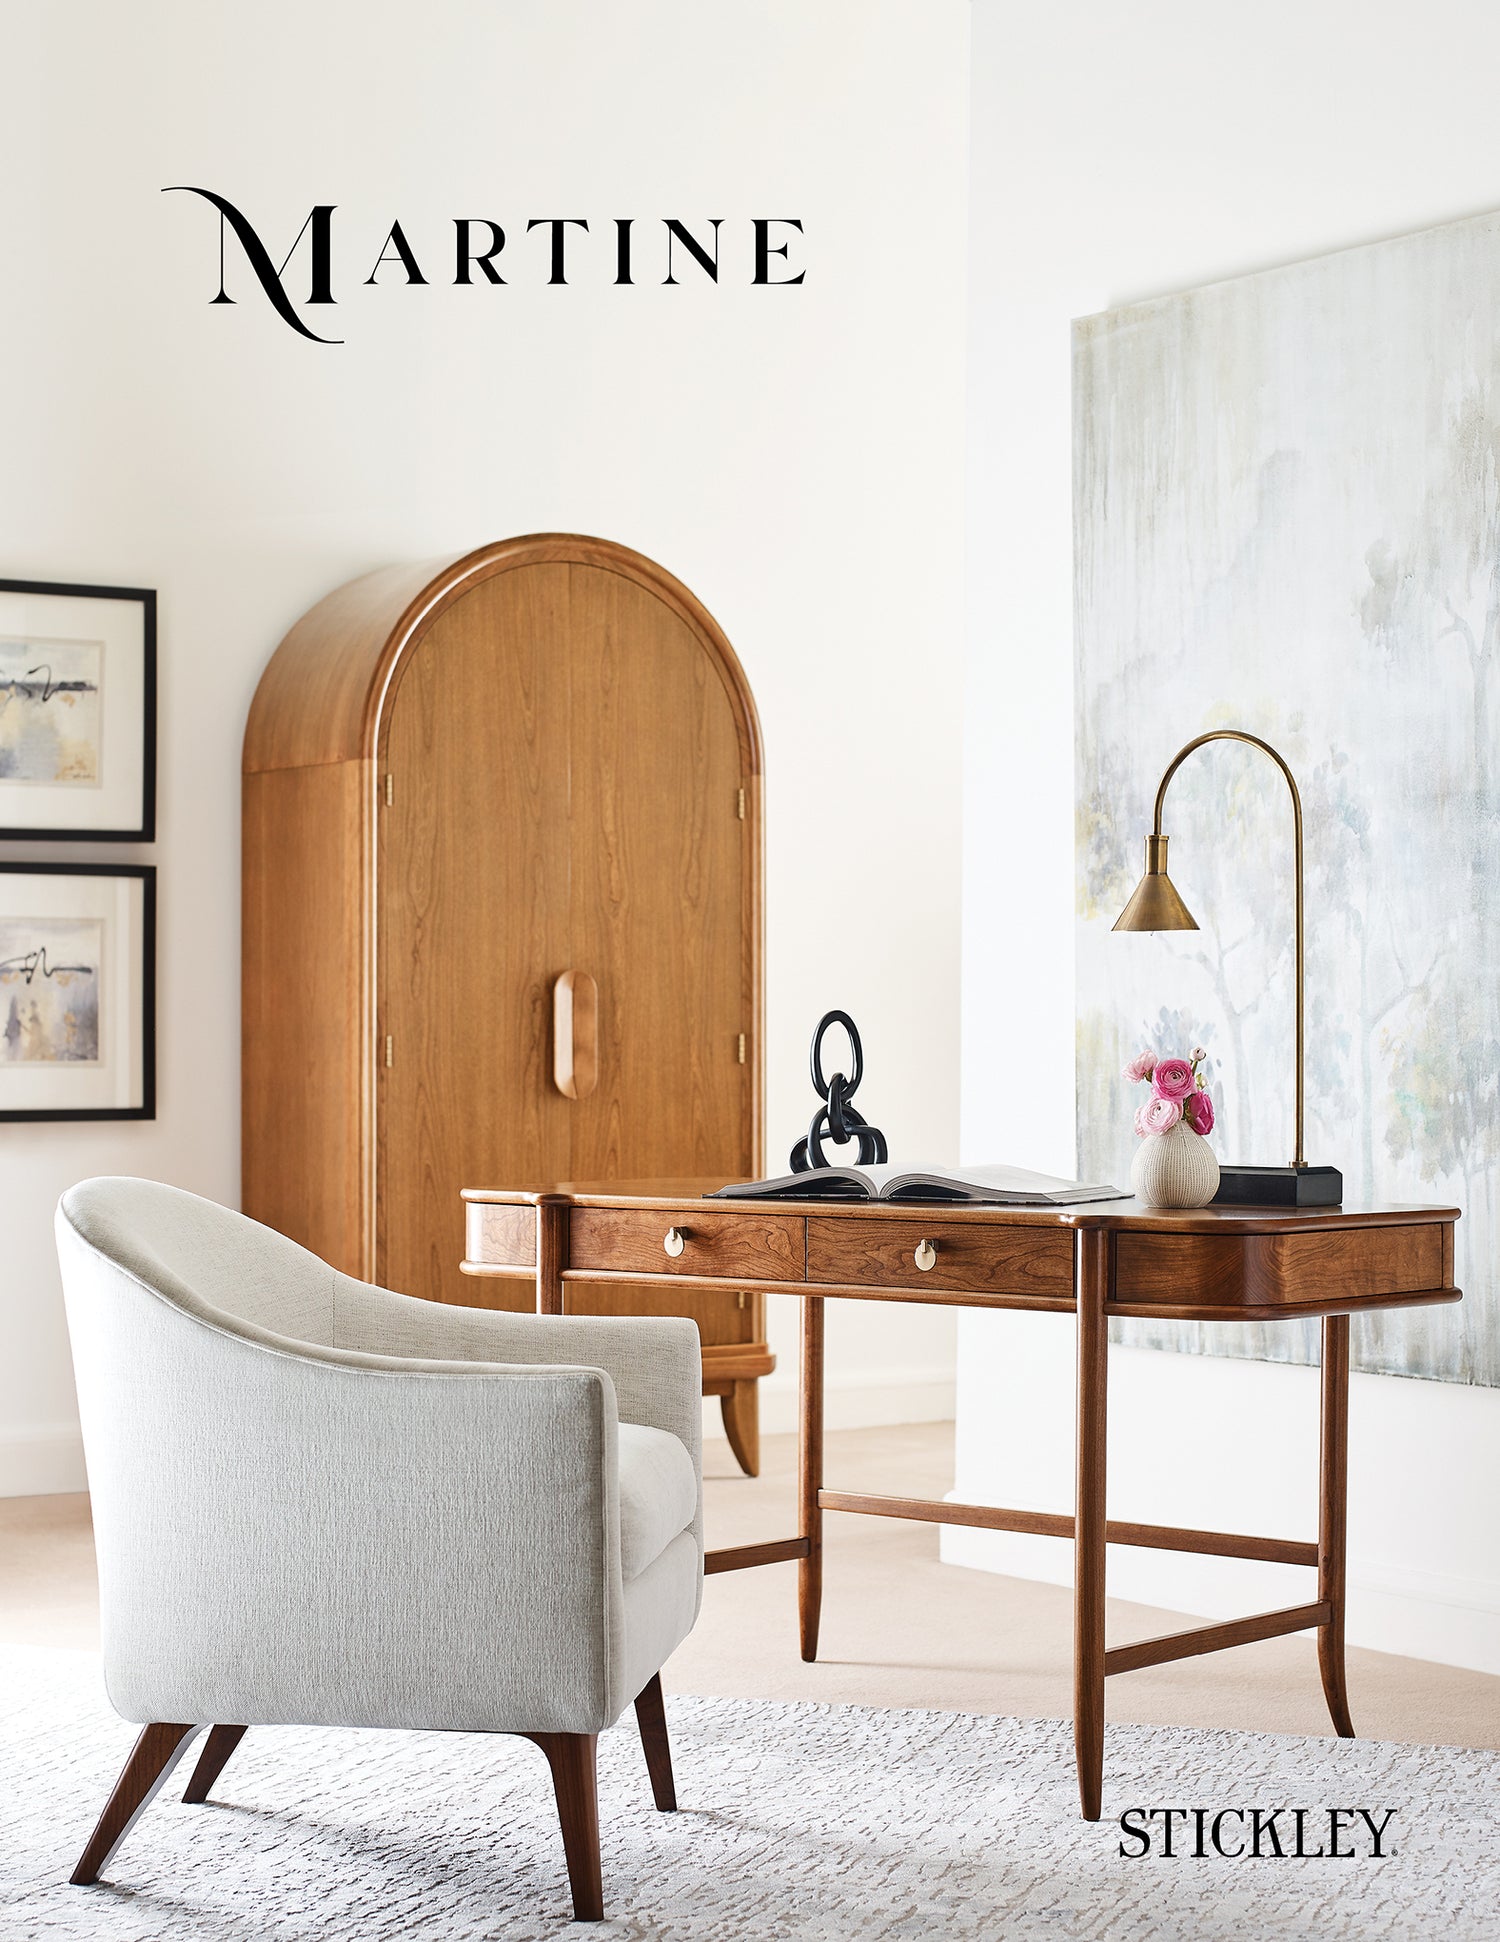 Martine Catalog - Stickley Brand